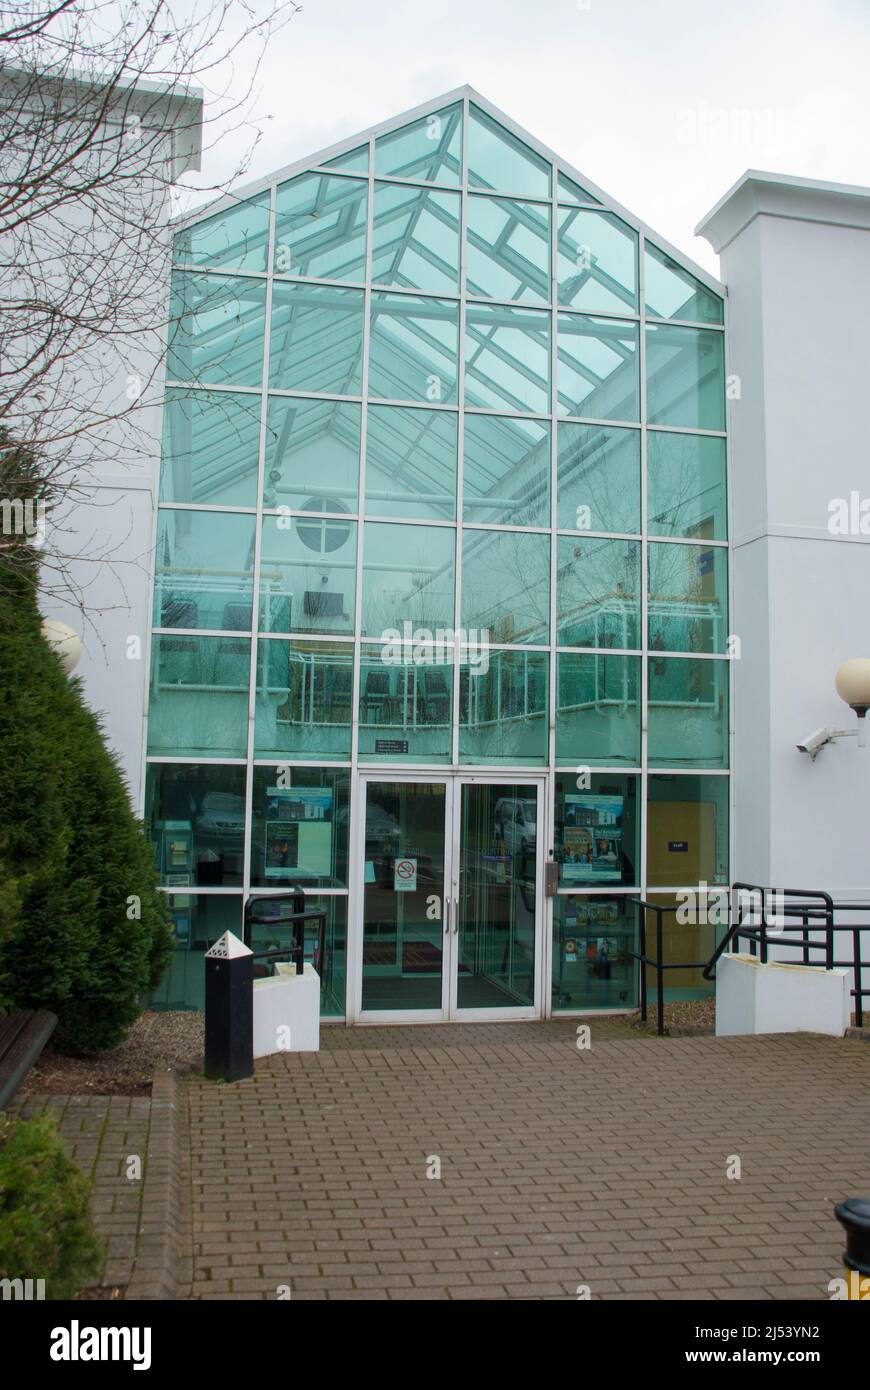 Entrance to Ballyearl Theatre, Newtownabbey, Northern Ireland. Stock Photo